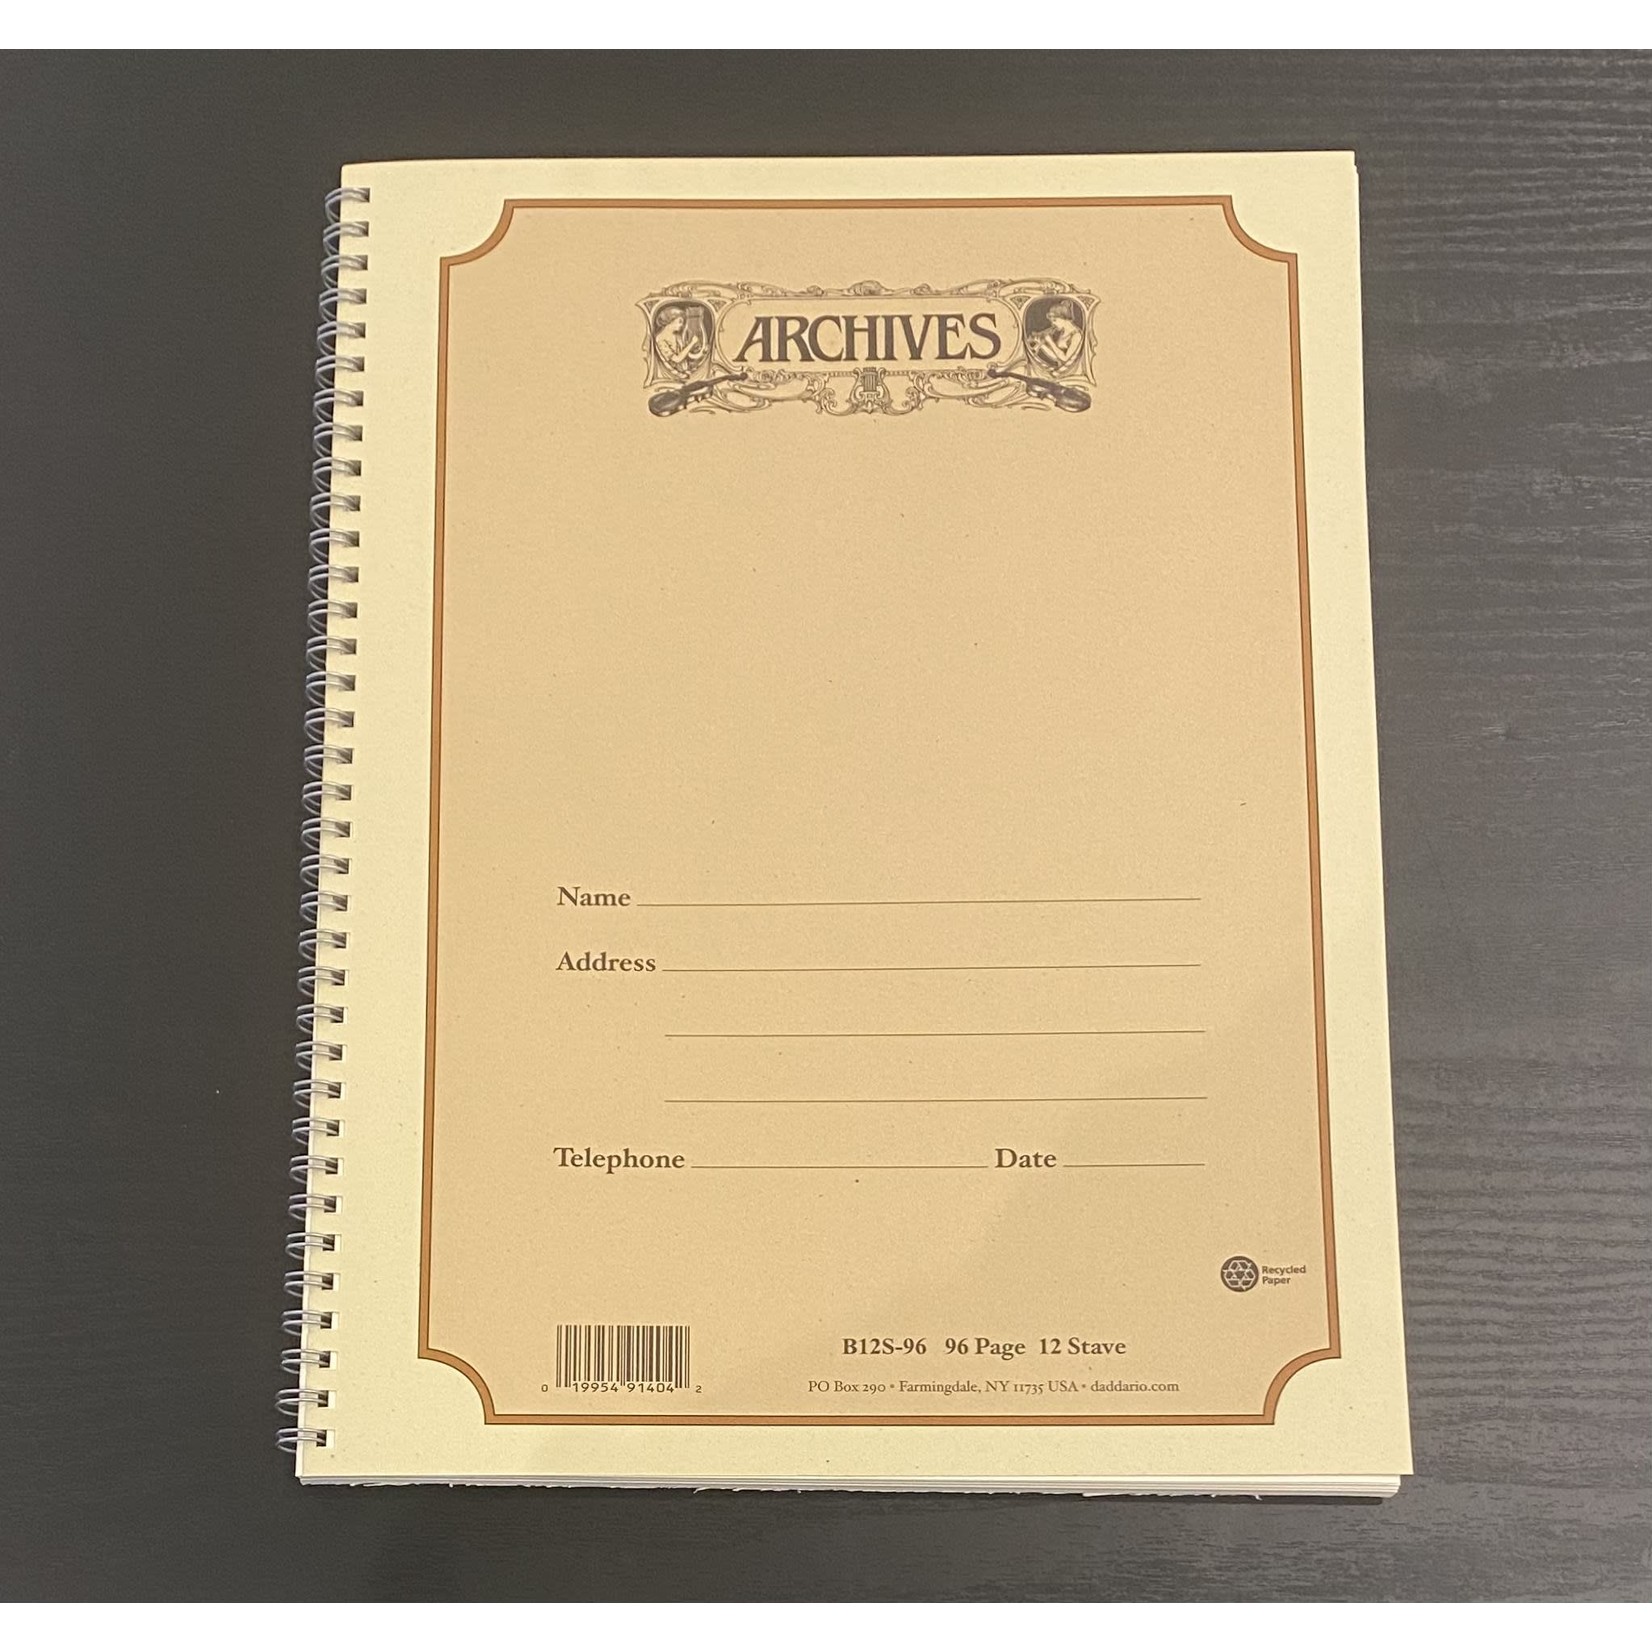 Manuscript: Archives, Spiral Notebook, 12st/96pg (9"x12")